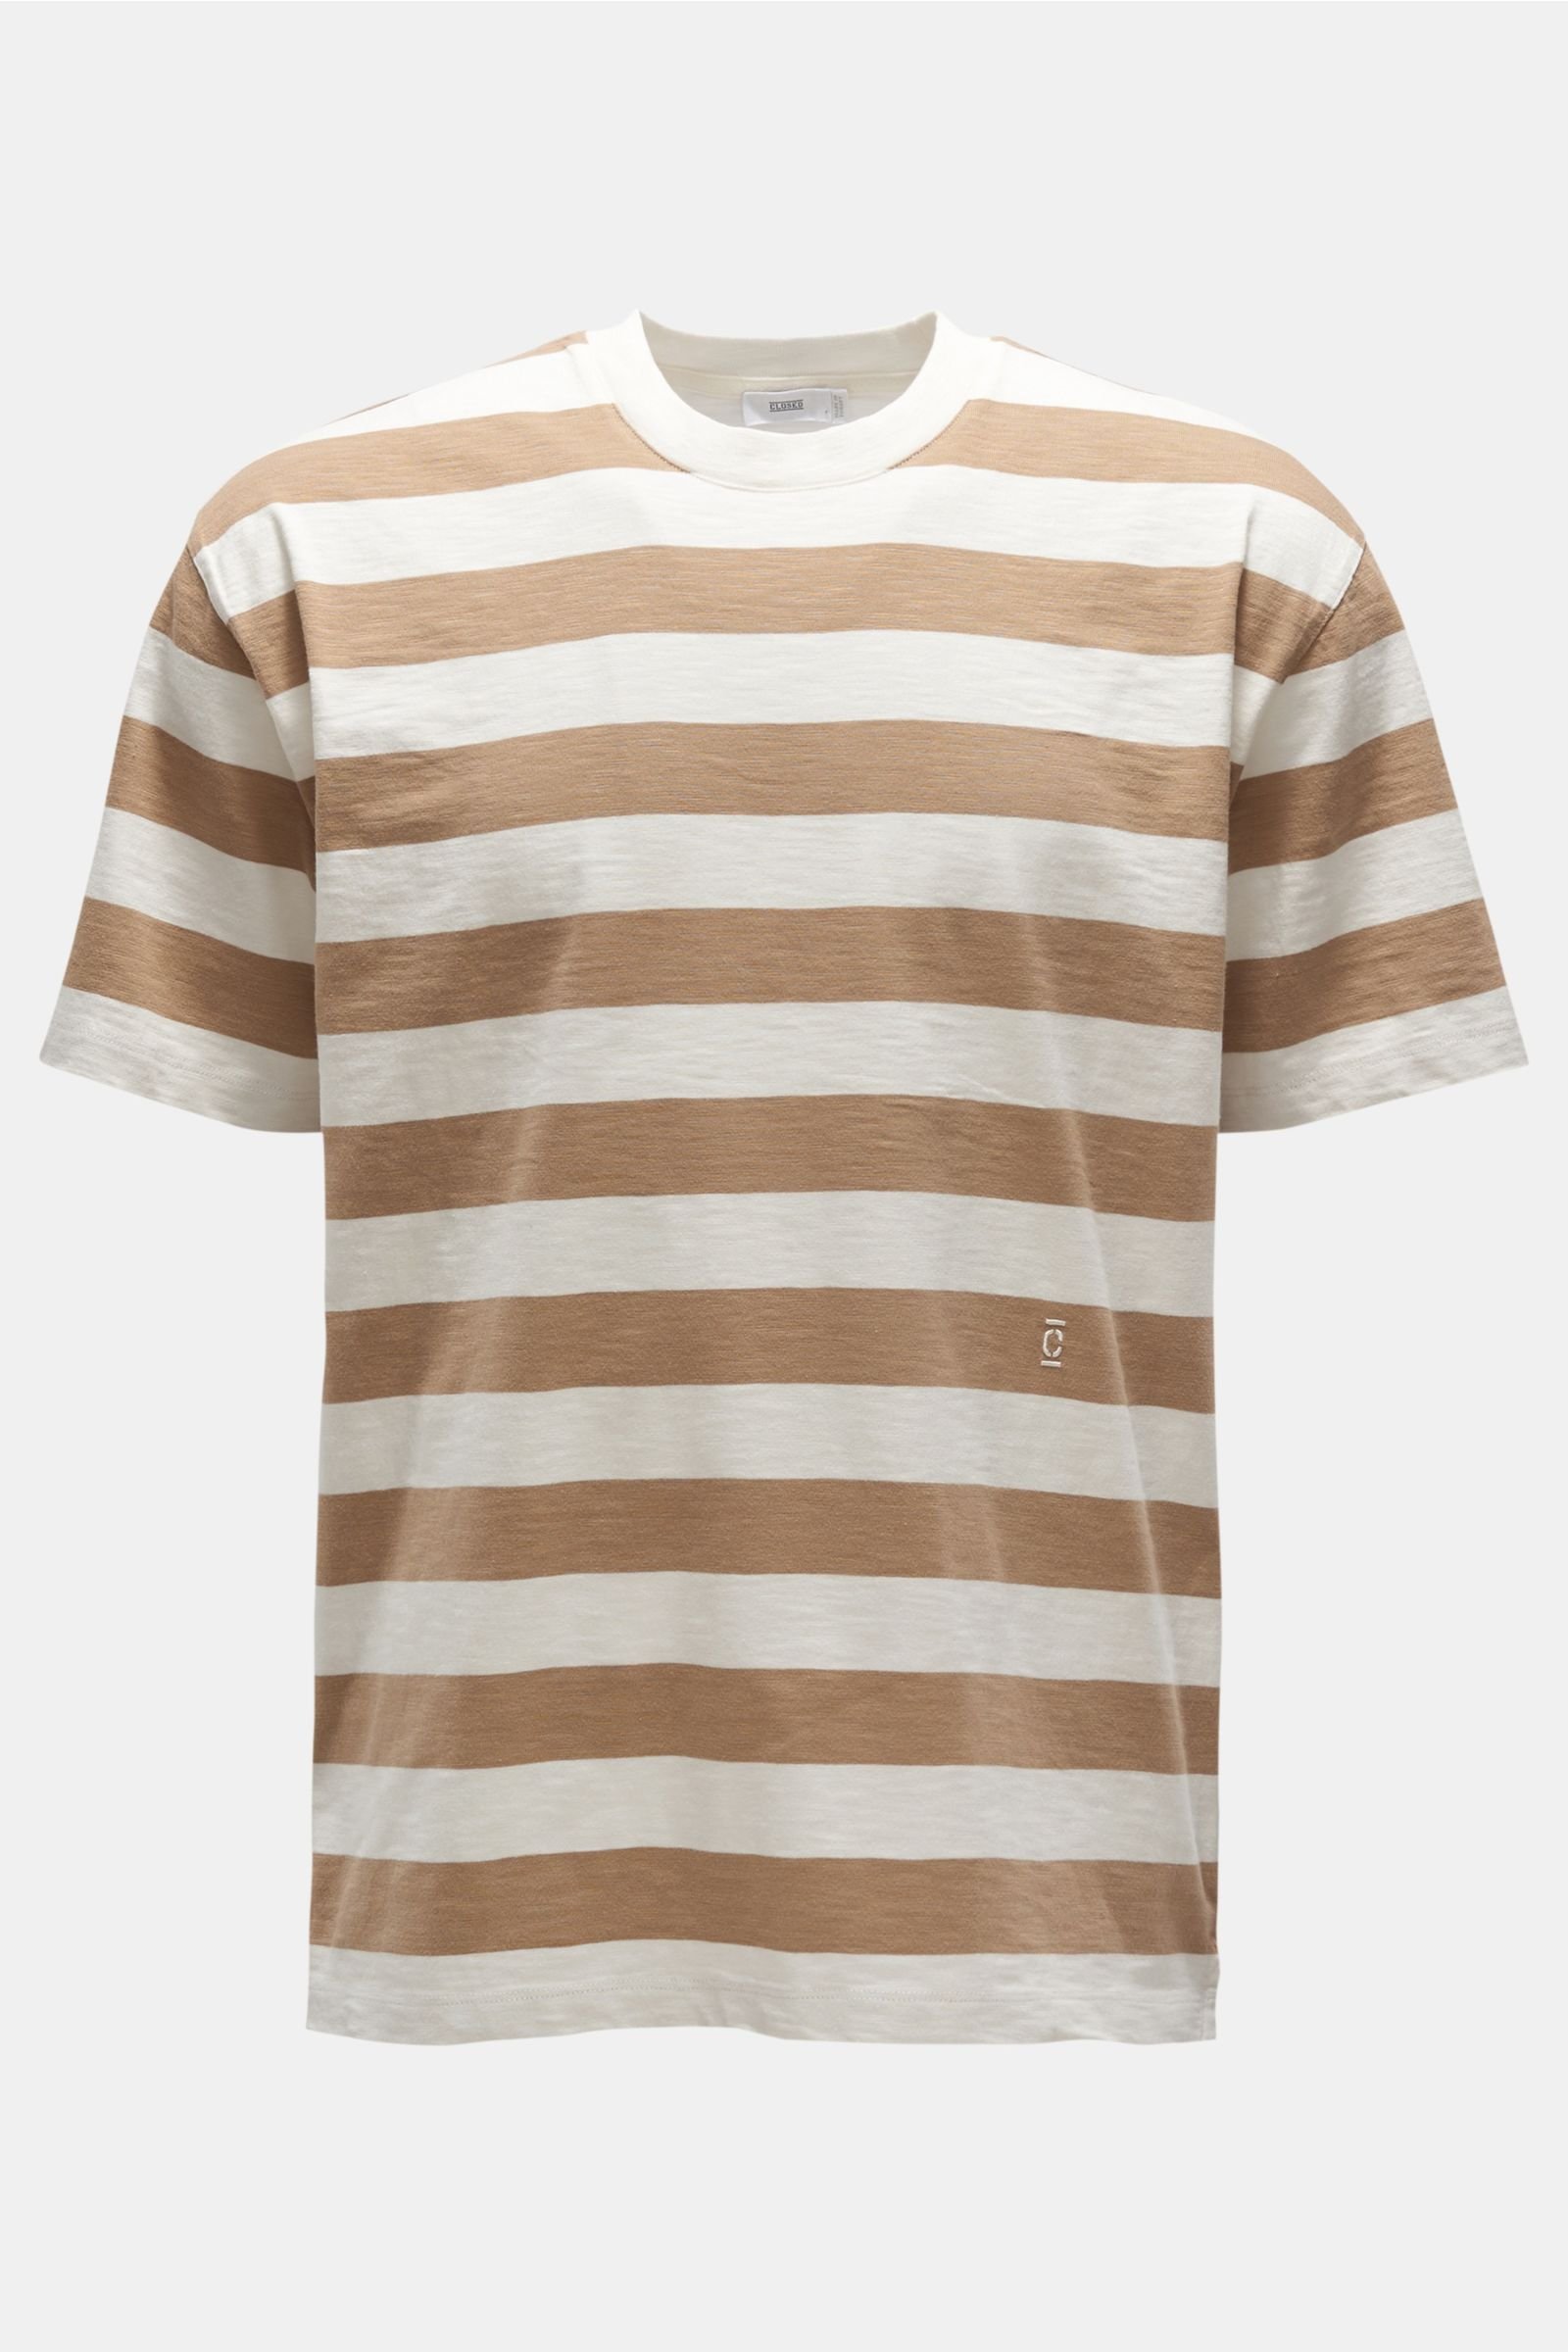 Crew neck T-shirt light brown/off-white striped